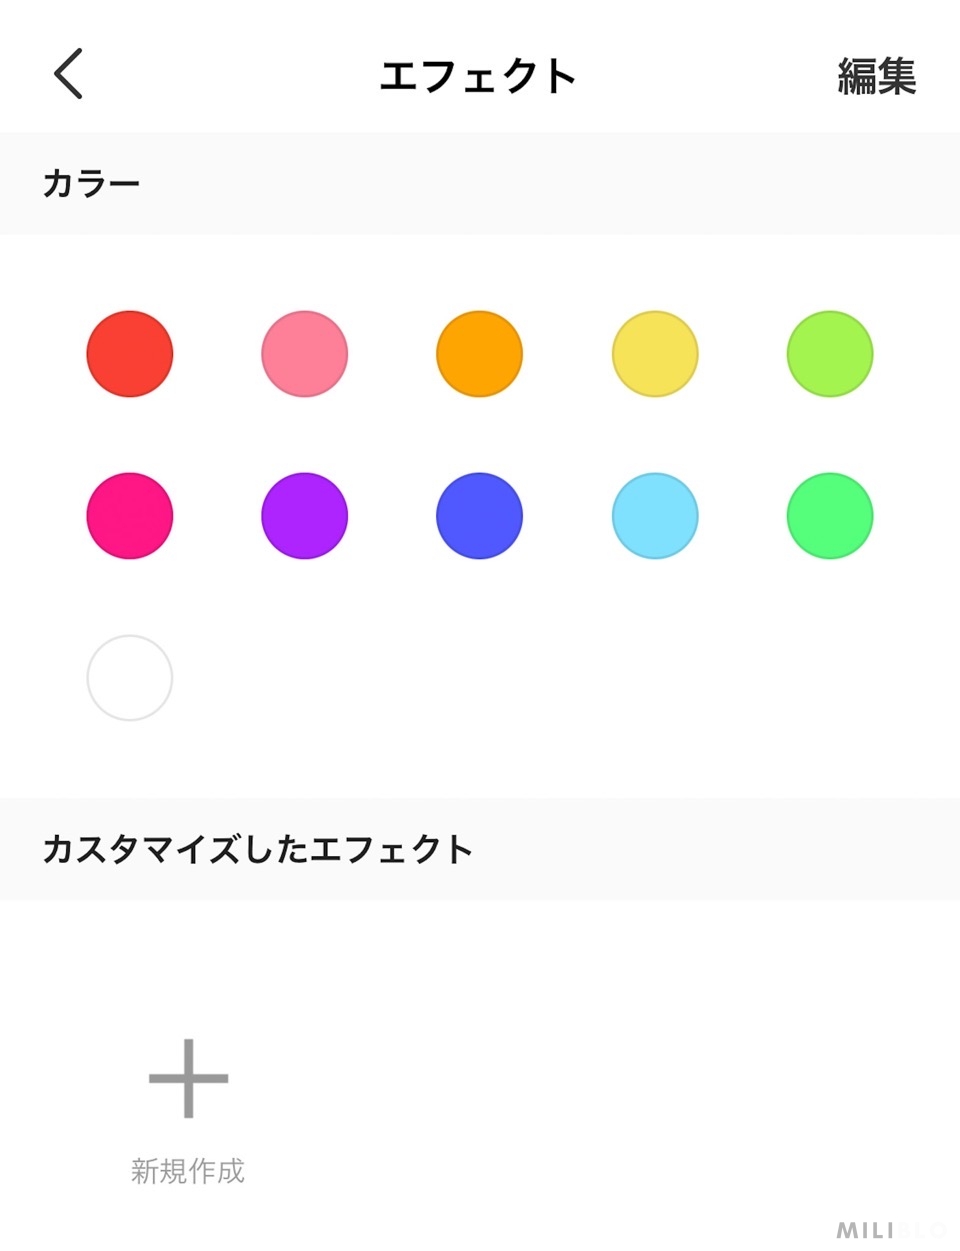 TP-Link「Tapo」アプリの色設定画面